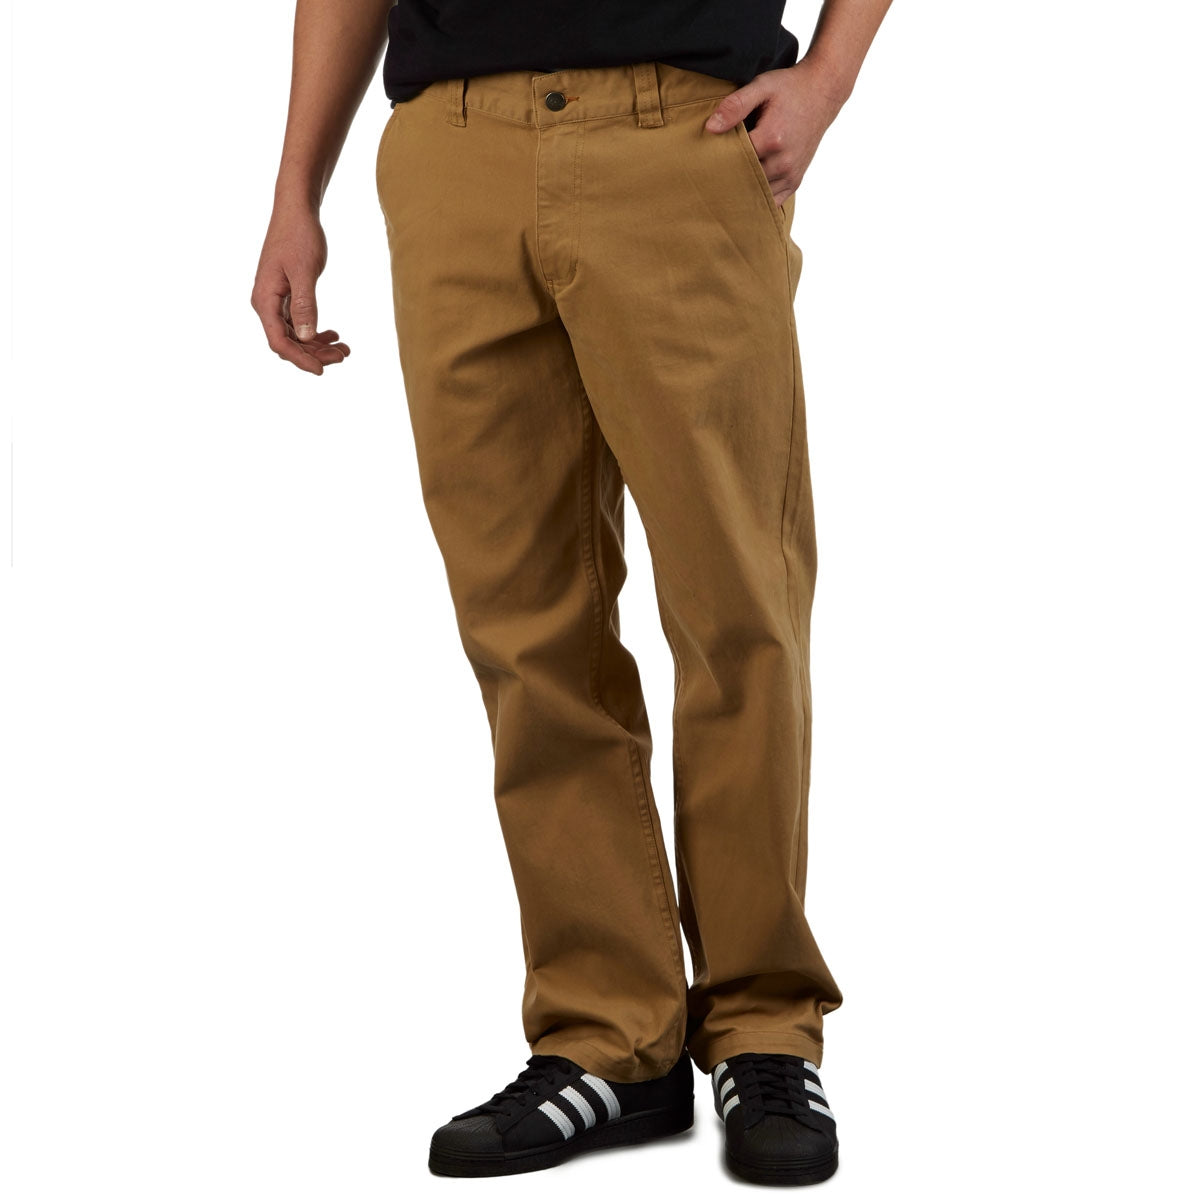 CCS Standard Plus Relaxed Chino Pants - Khaki image 1